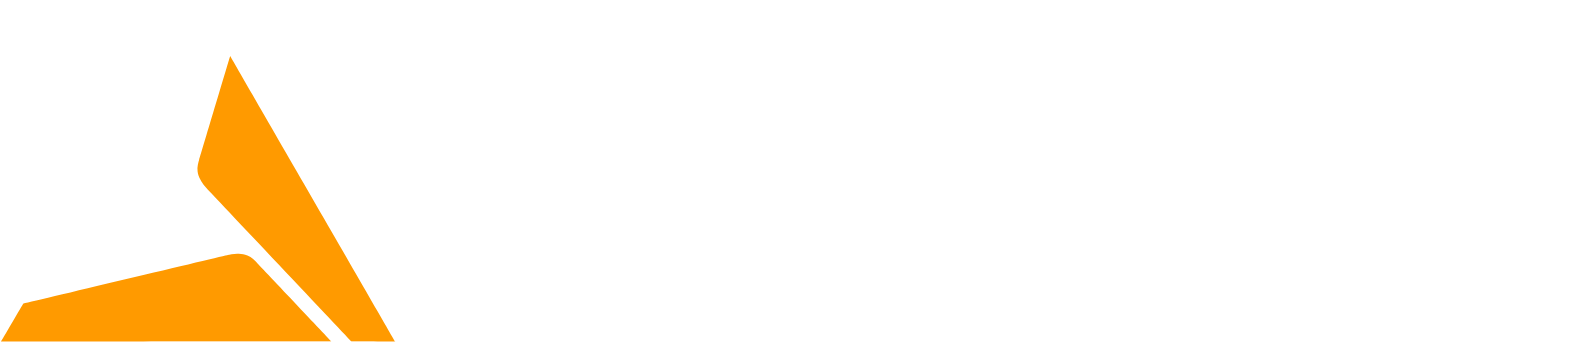 Polymetal Logo groß für dunkle Hintergründe (transparentes PNG)